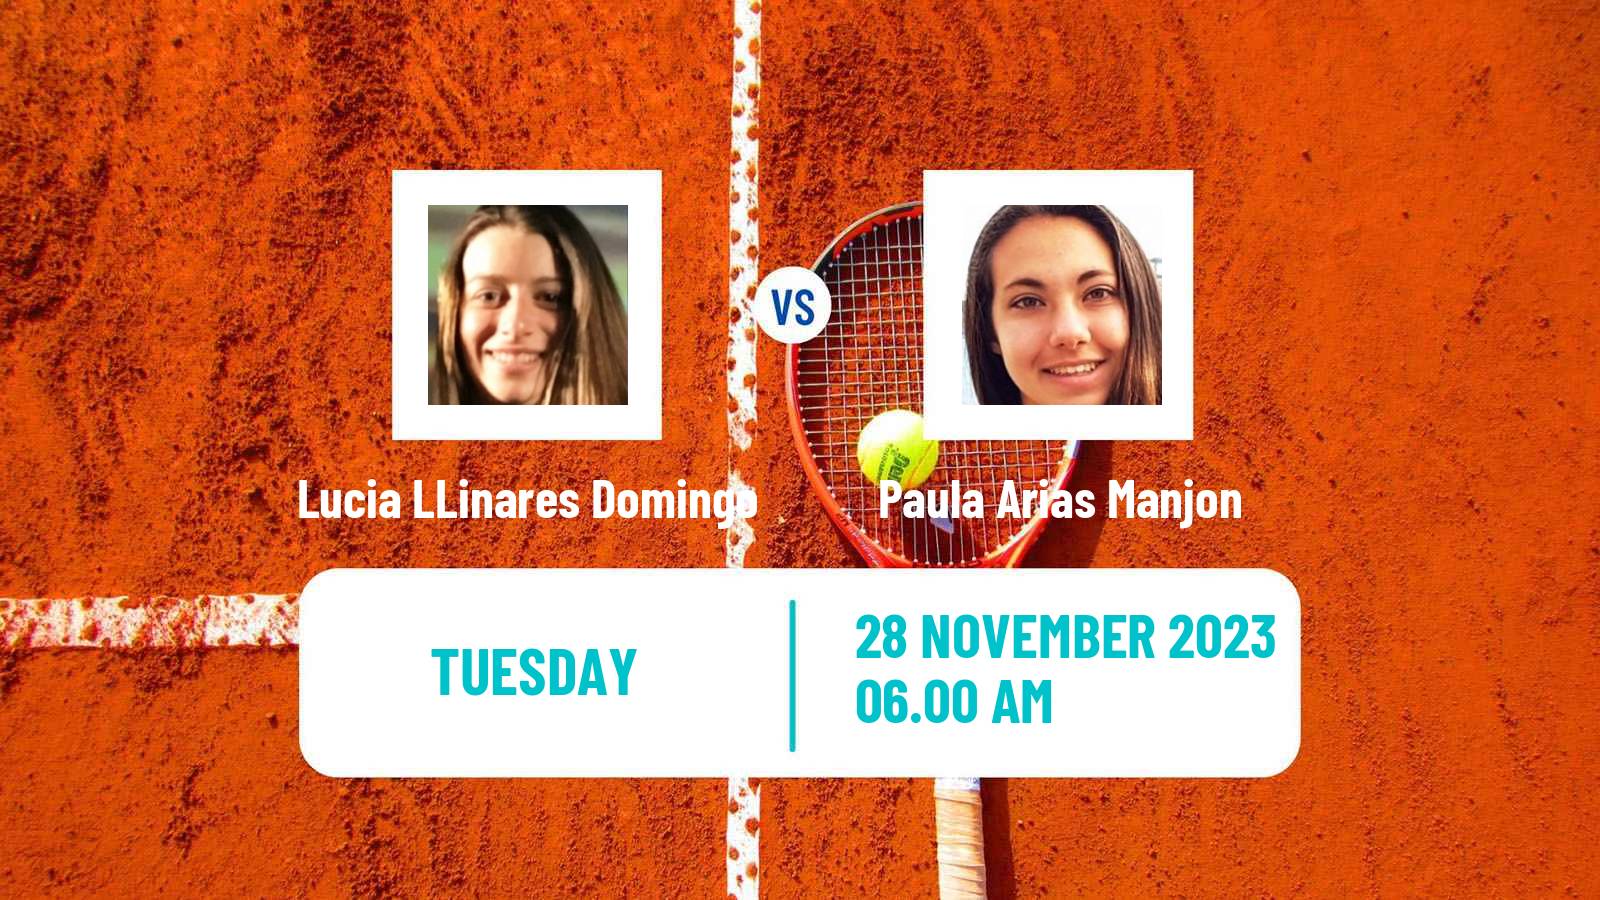 Tennis ITF W15 Valencia Women 2023 Lucia LLinares Domingo - Paula Arias Manjon